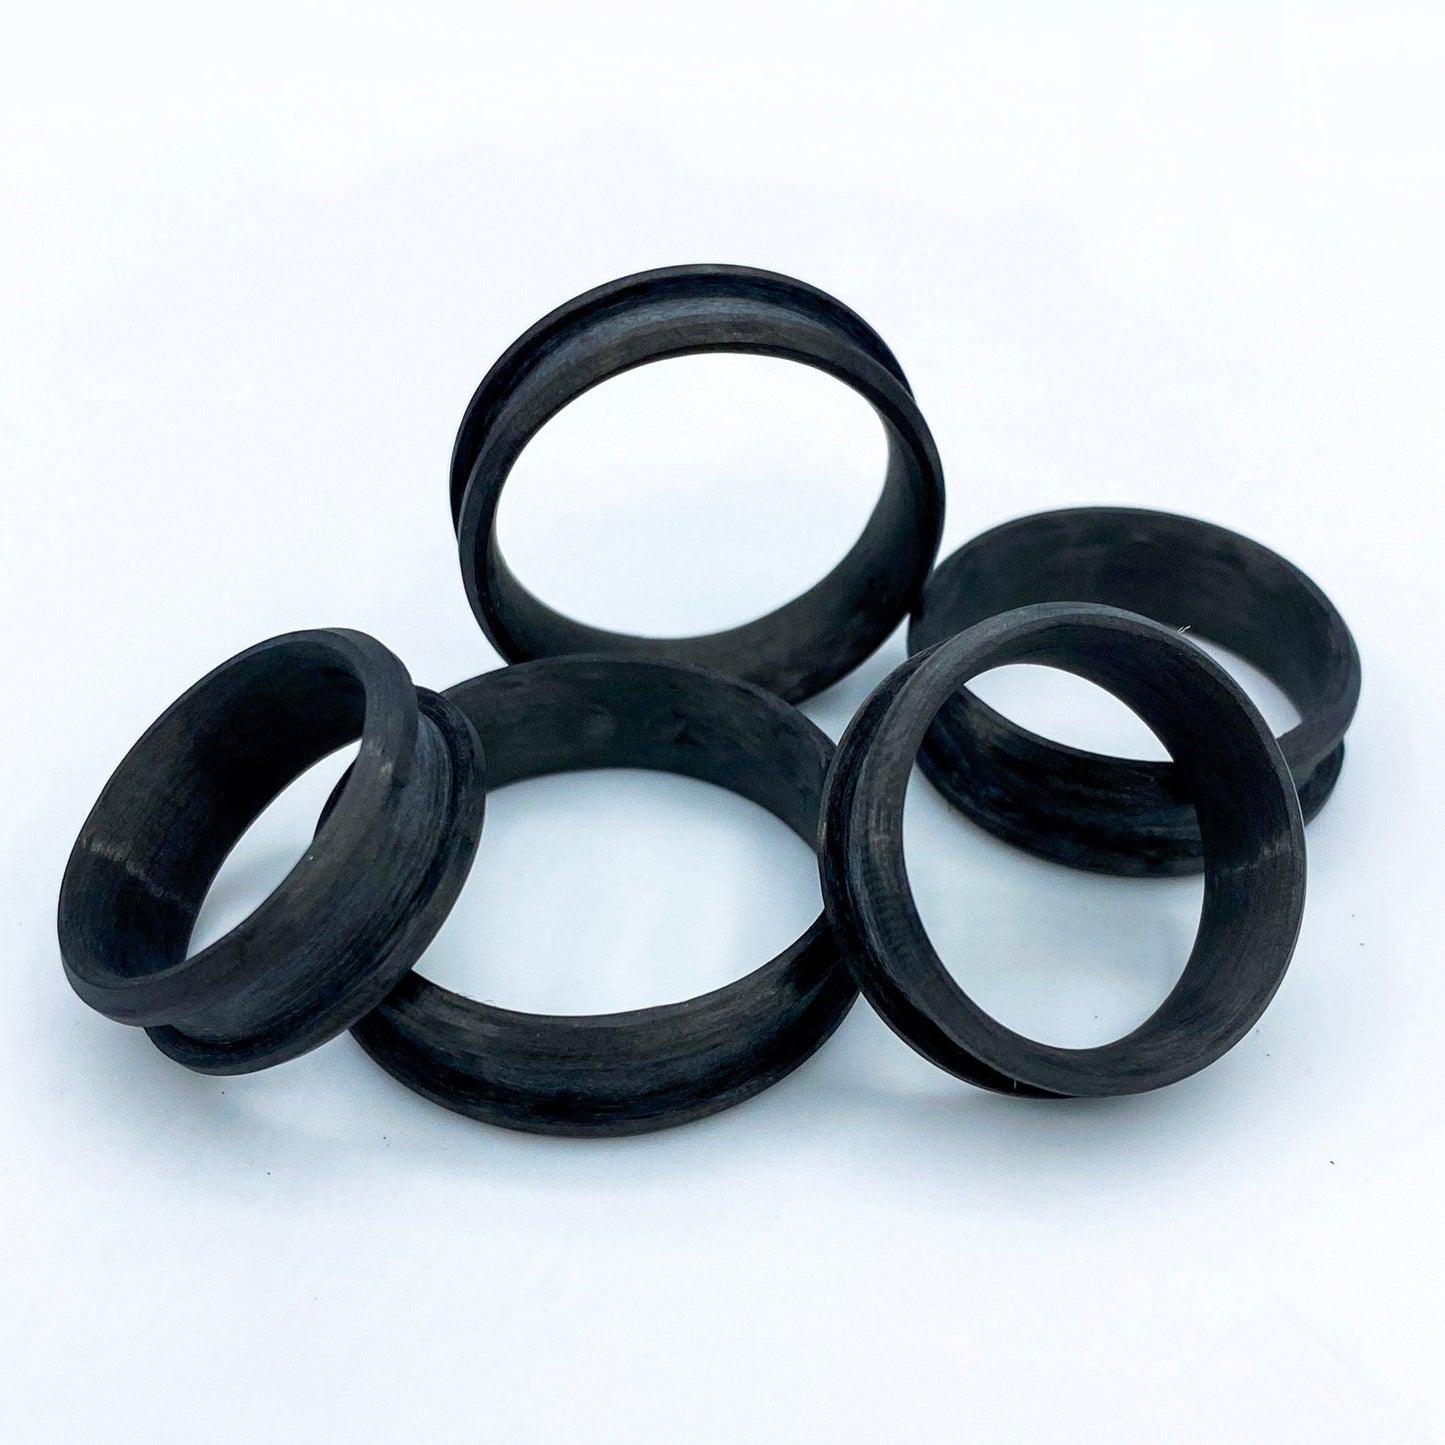 5 Pack - Carbon Fiber Ring Blank - Patrick Adair Supplies